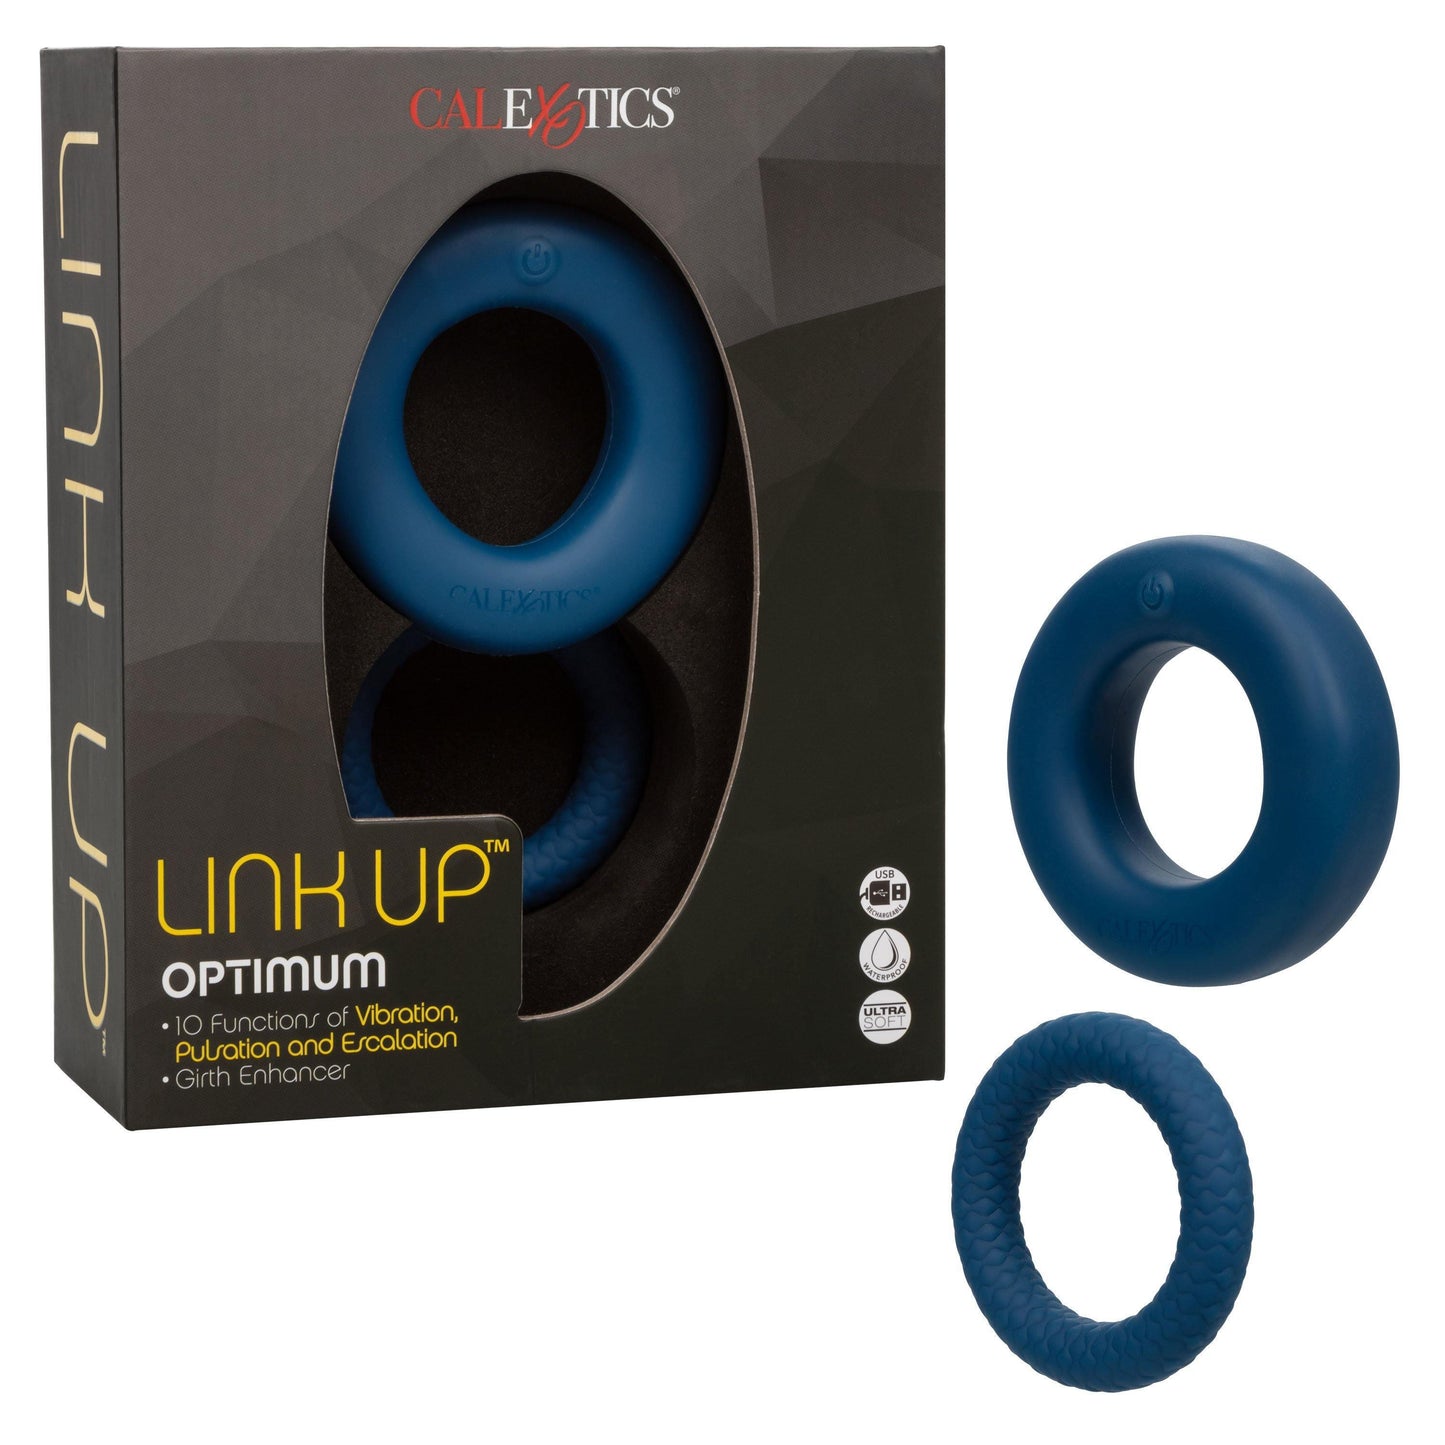 Link Up Optimum - Blue - My Sex Toy Hub